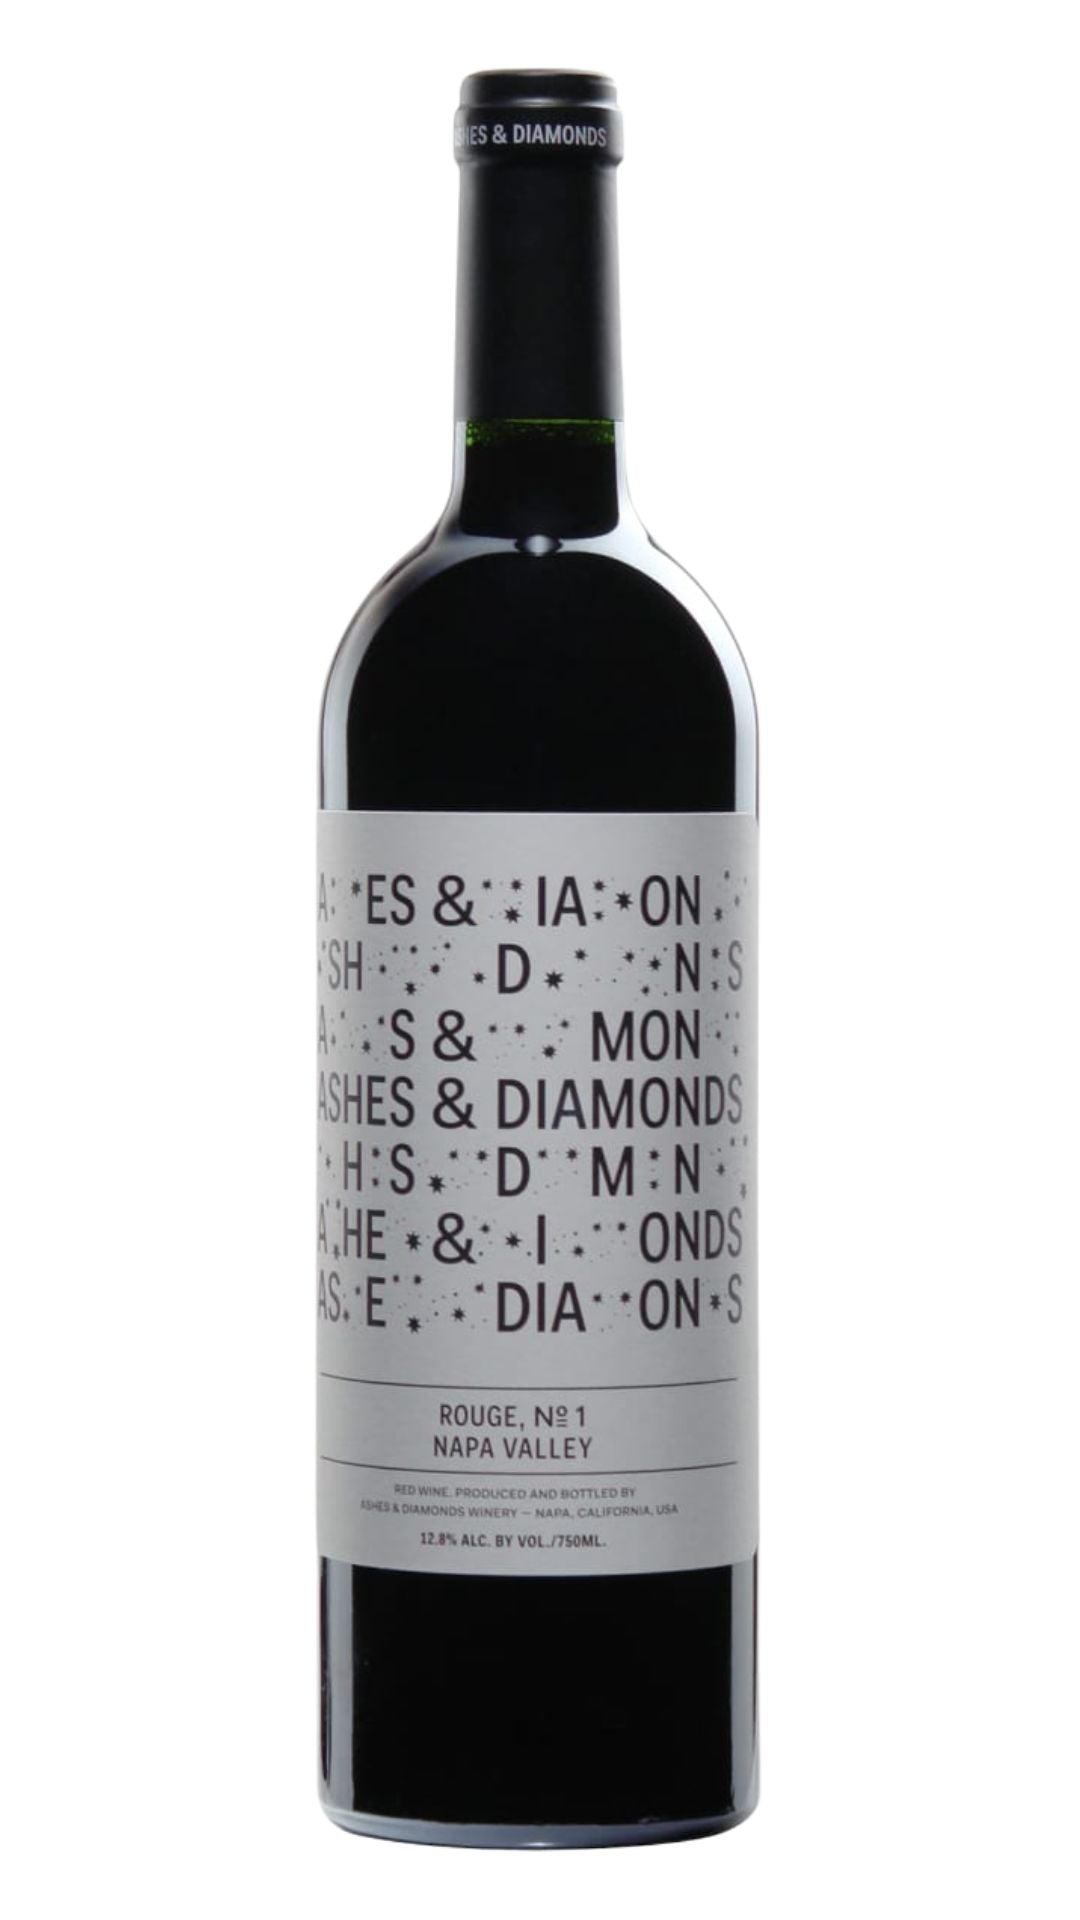 Ashes & Diamonds "Rouge No. 6" Napa Valley - Harvest Wine Shop